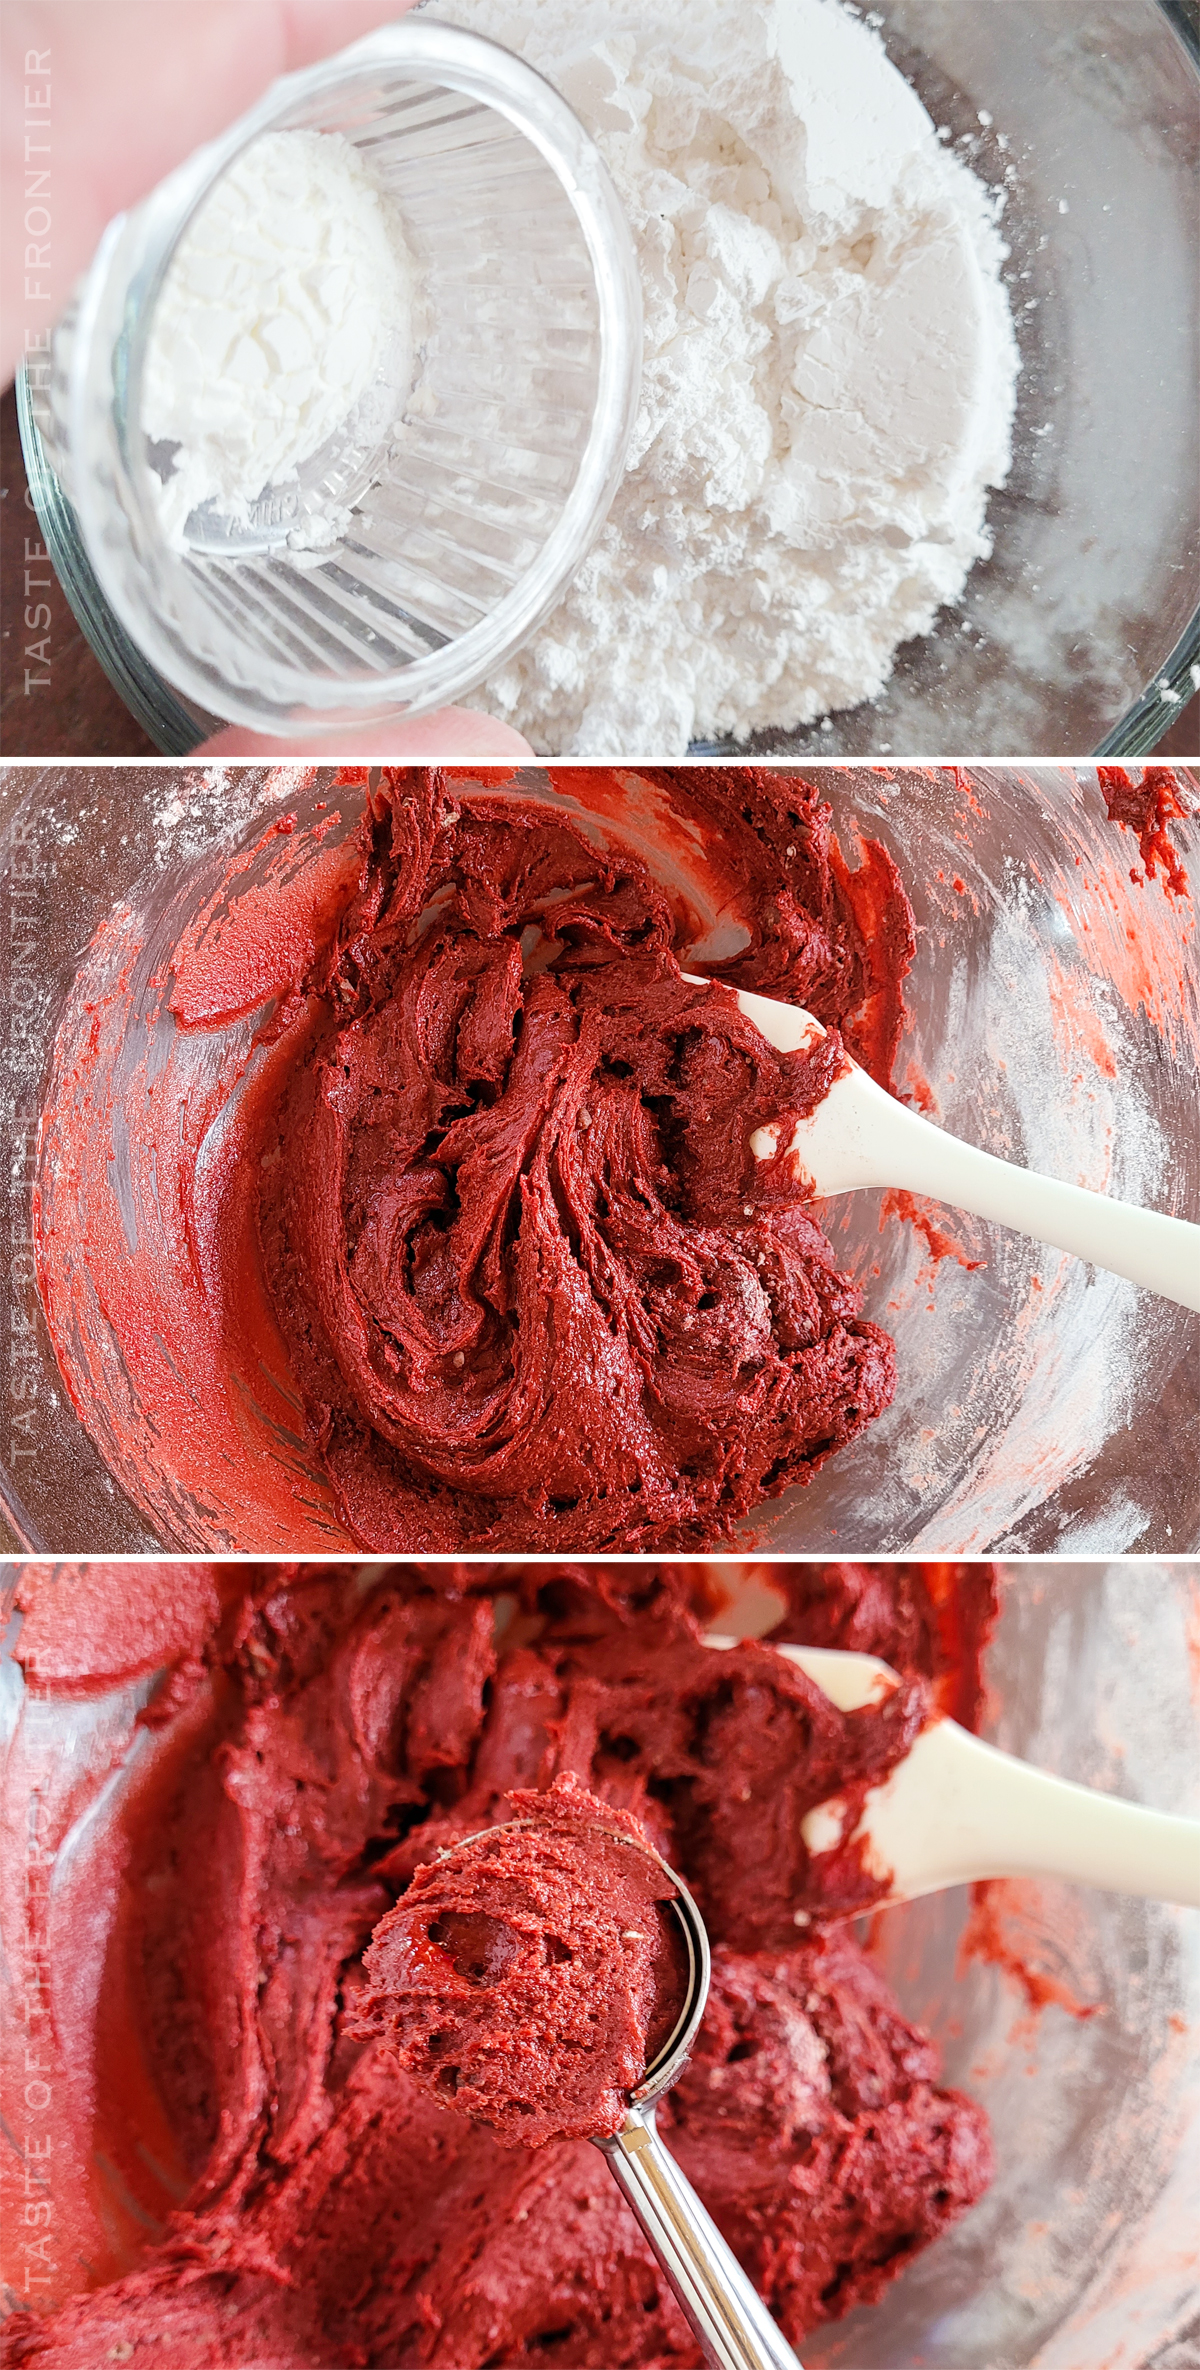 Making red velvet cookies